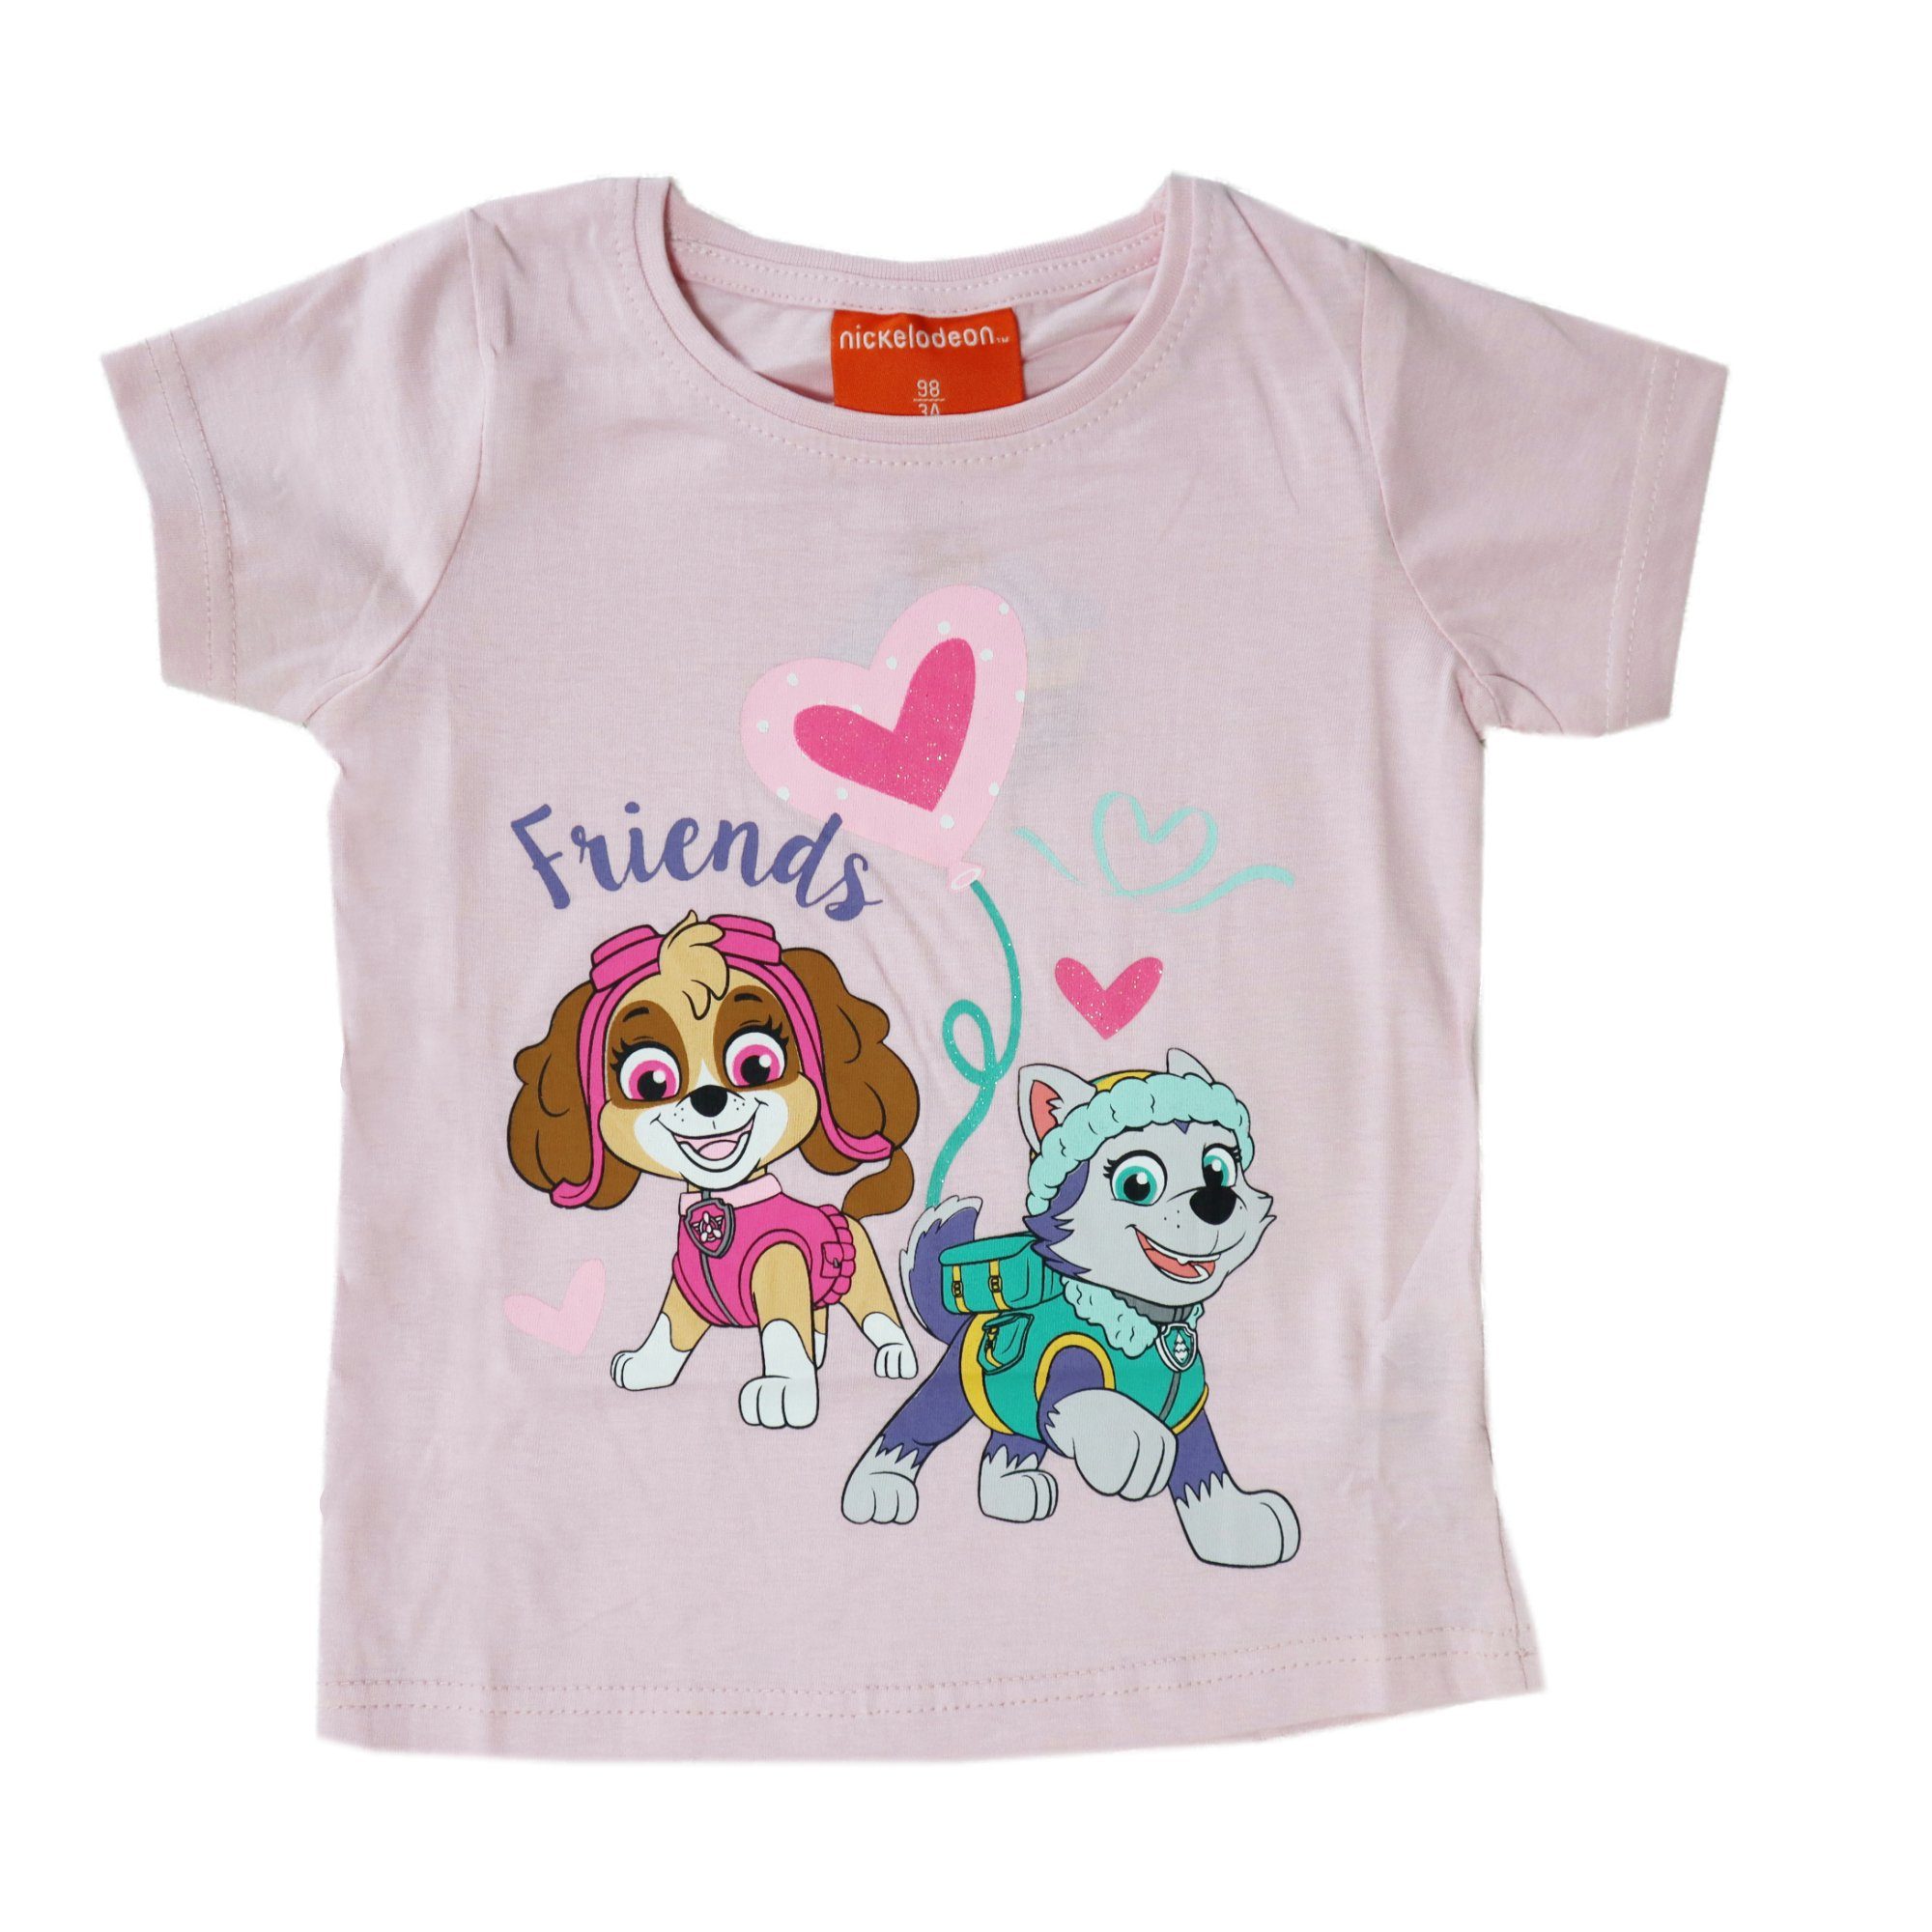 PAW PATROL Print-Shirt Skye Everest Kinder Mädchen T-Shirt Gr. 98 bis 128, 100% Baumwolle